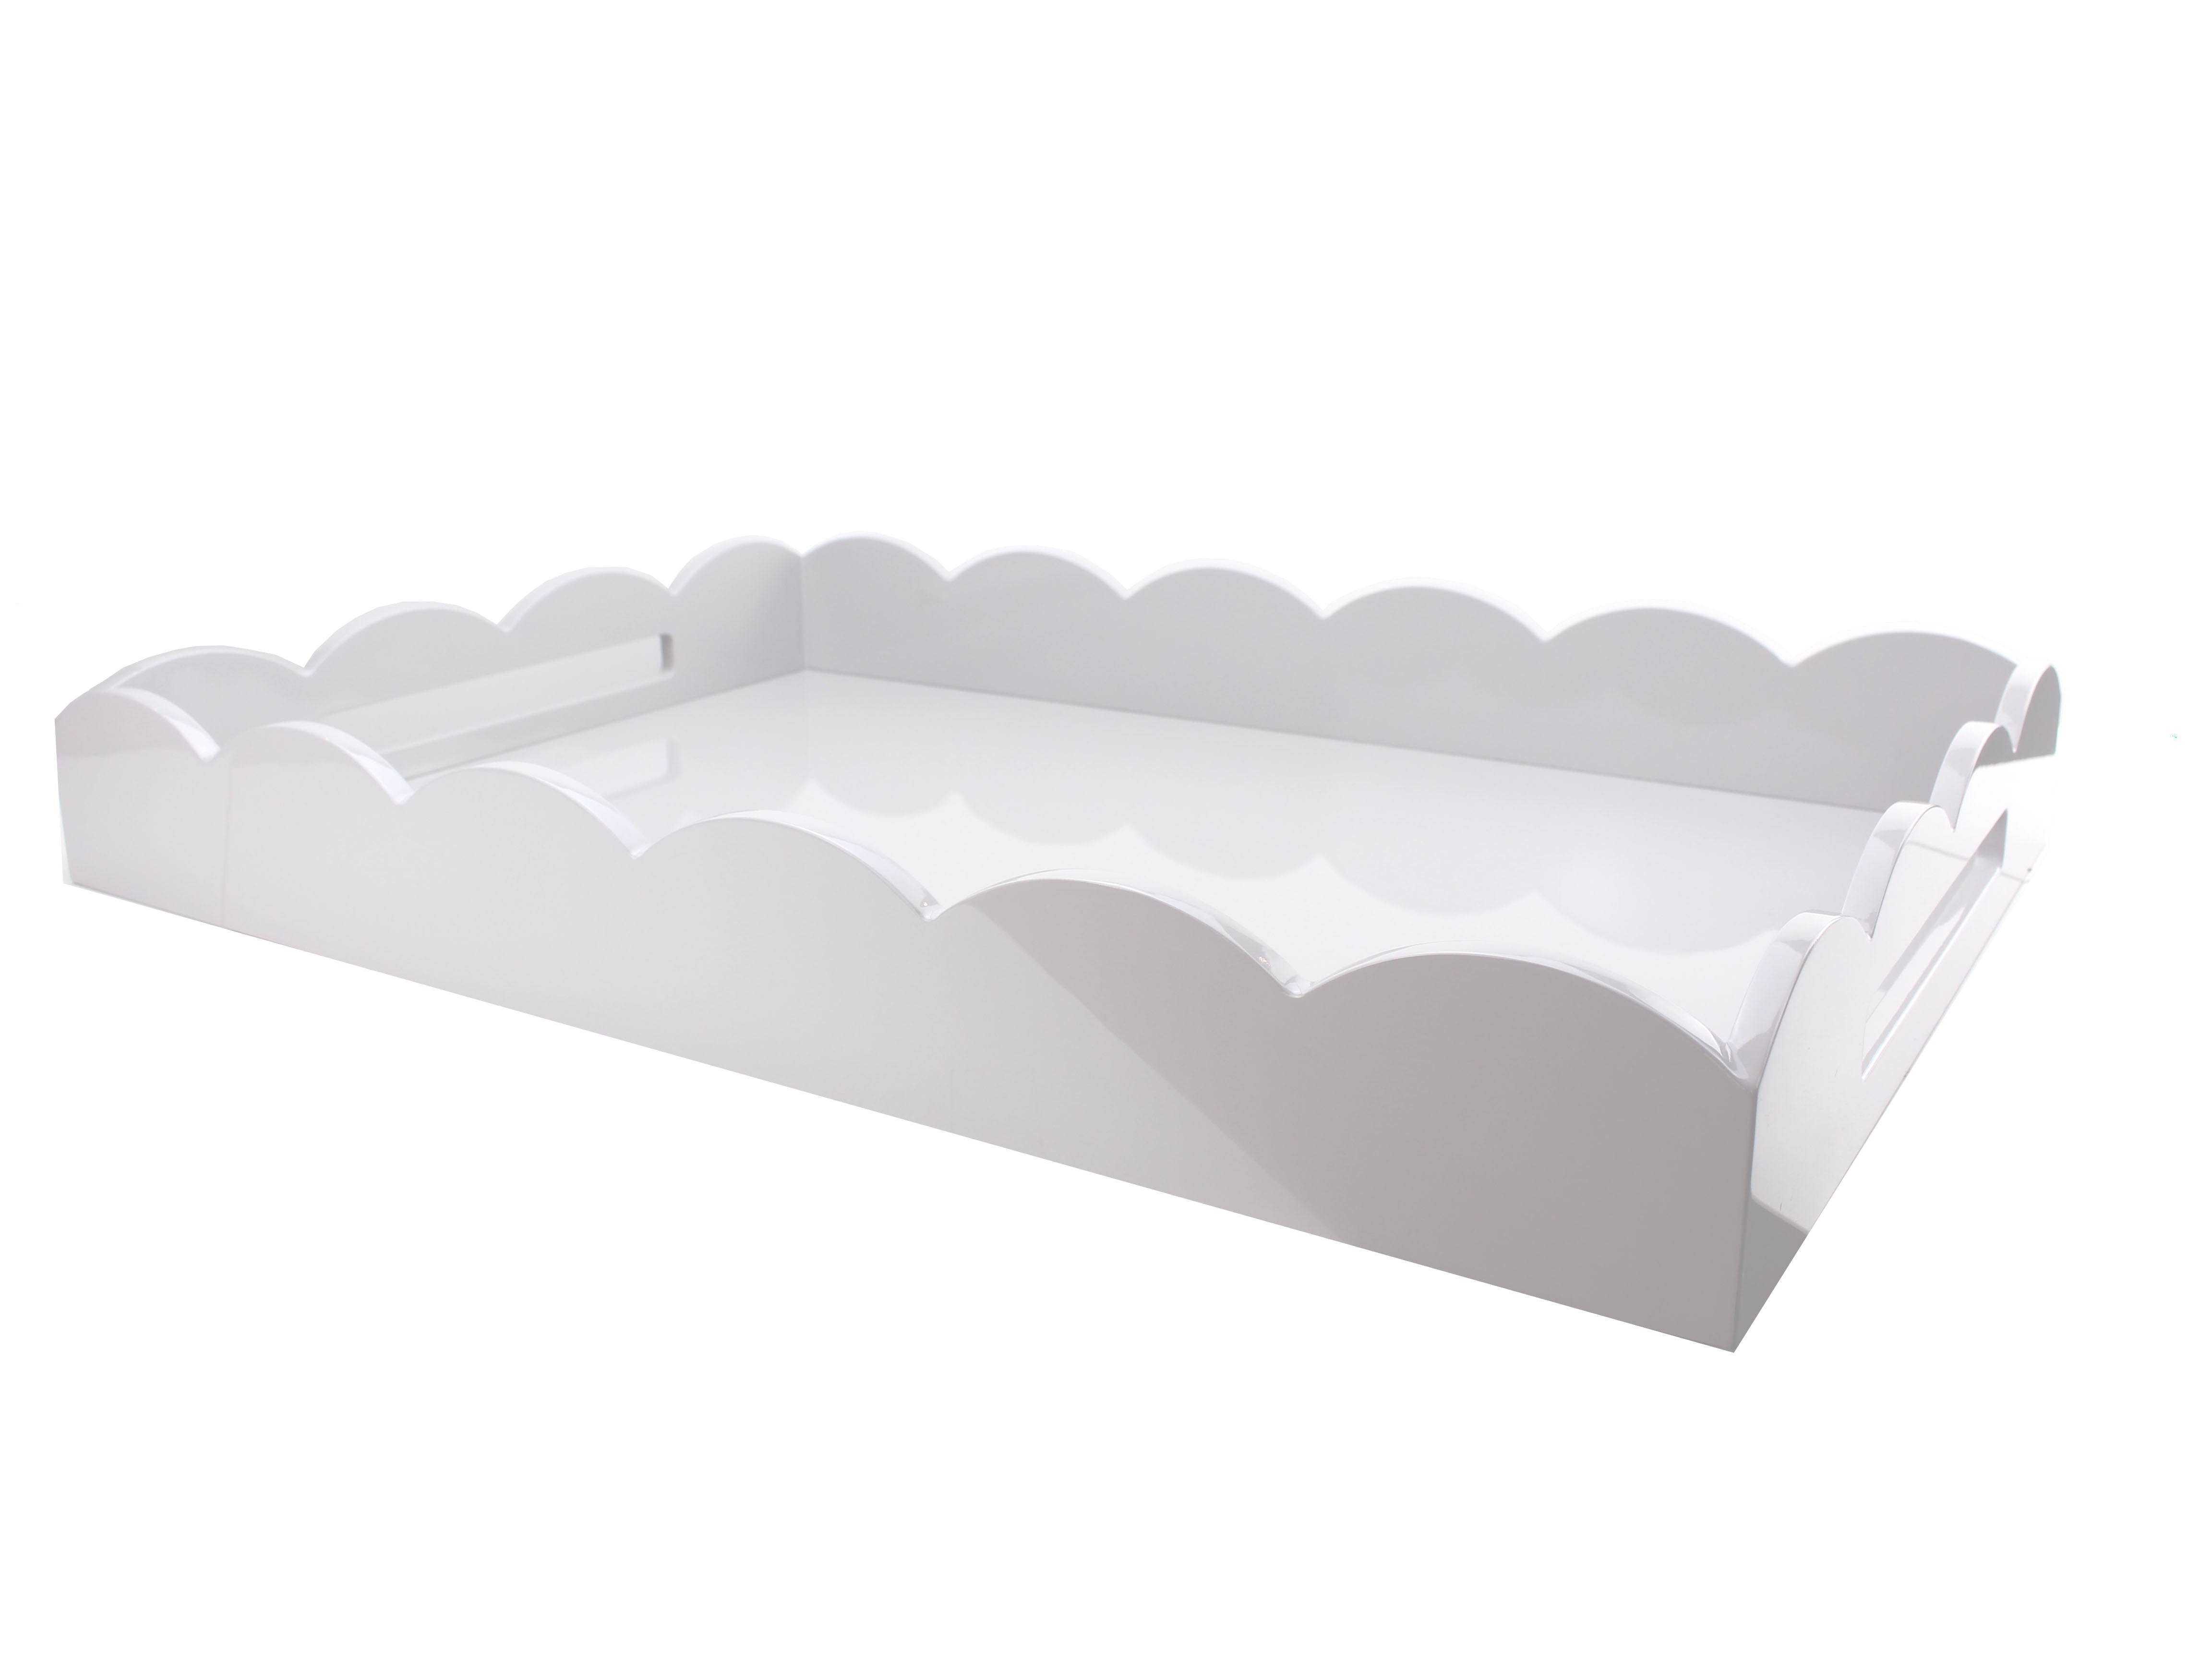 Scalloped tray | Large white | Addison Ross